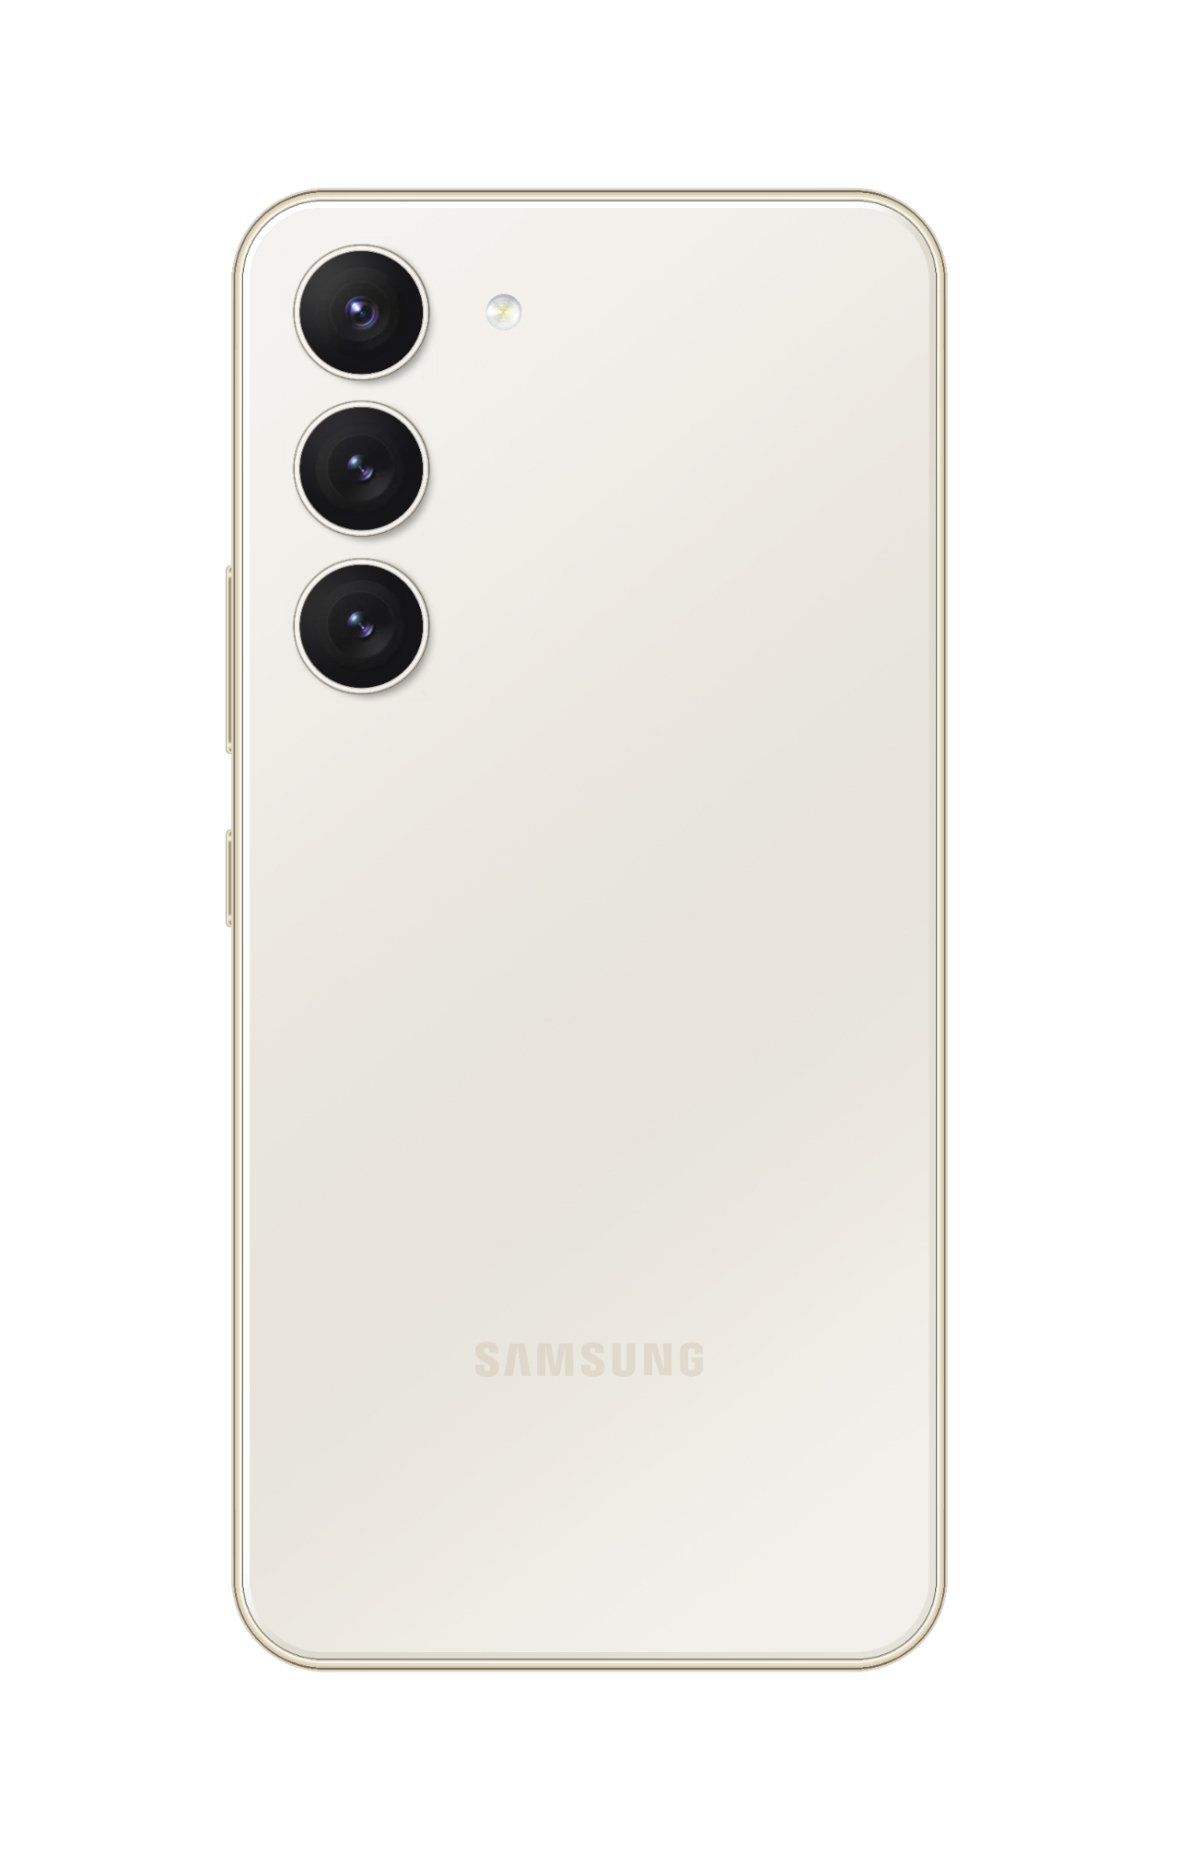 Samsung มือลั่น ! หลุดภาพทีเซอร์ Galaxy S23 เตรียมเปิดตัว 1 กุมภาพันธ์นี้